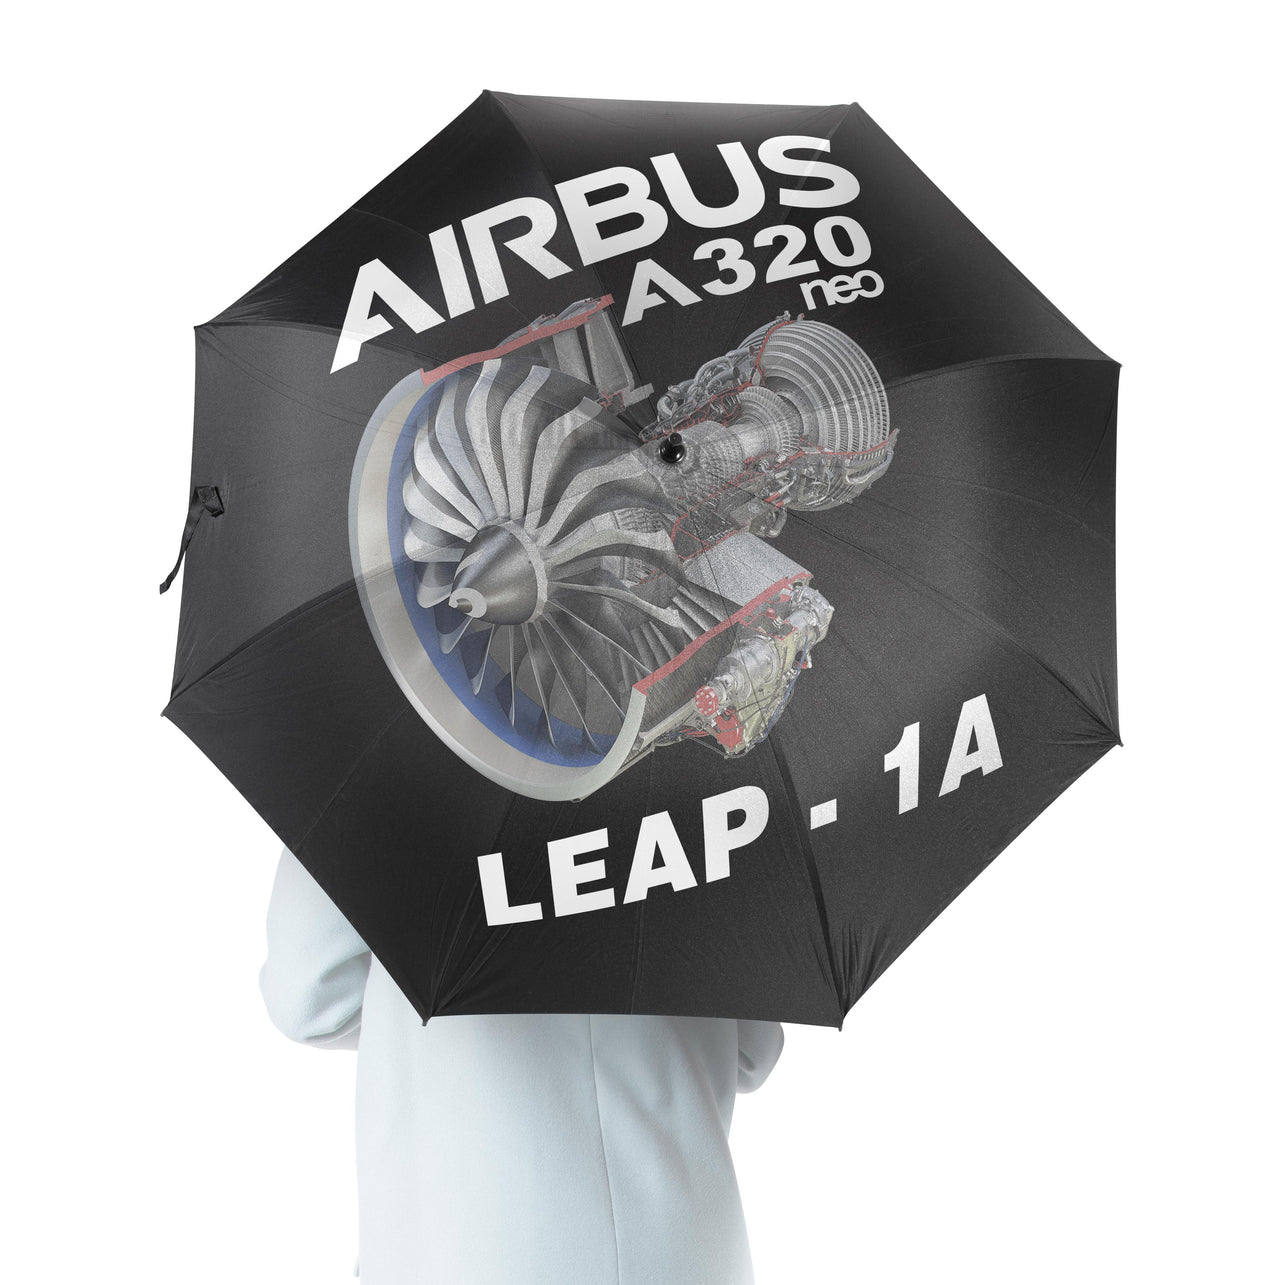 Airbus A320neo & Leap 1A Designed Umbrella